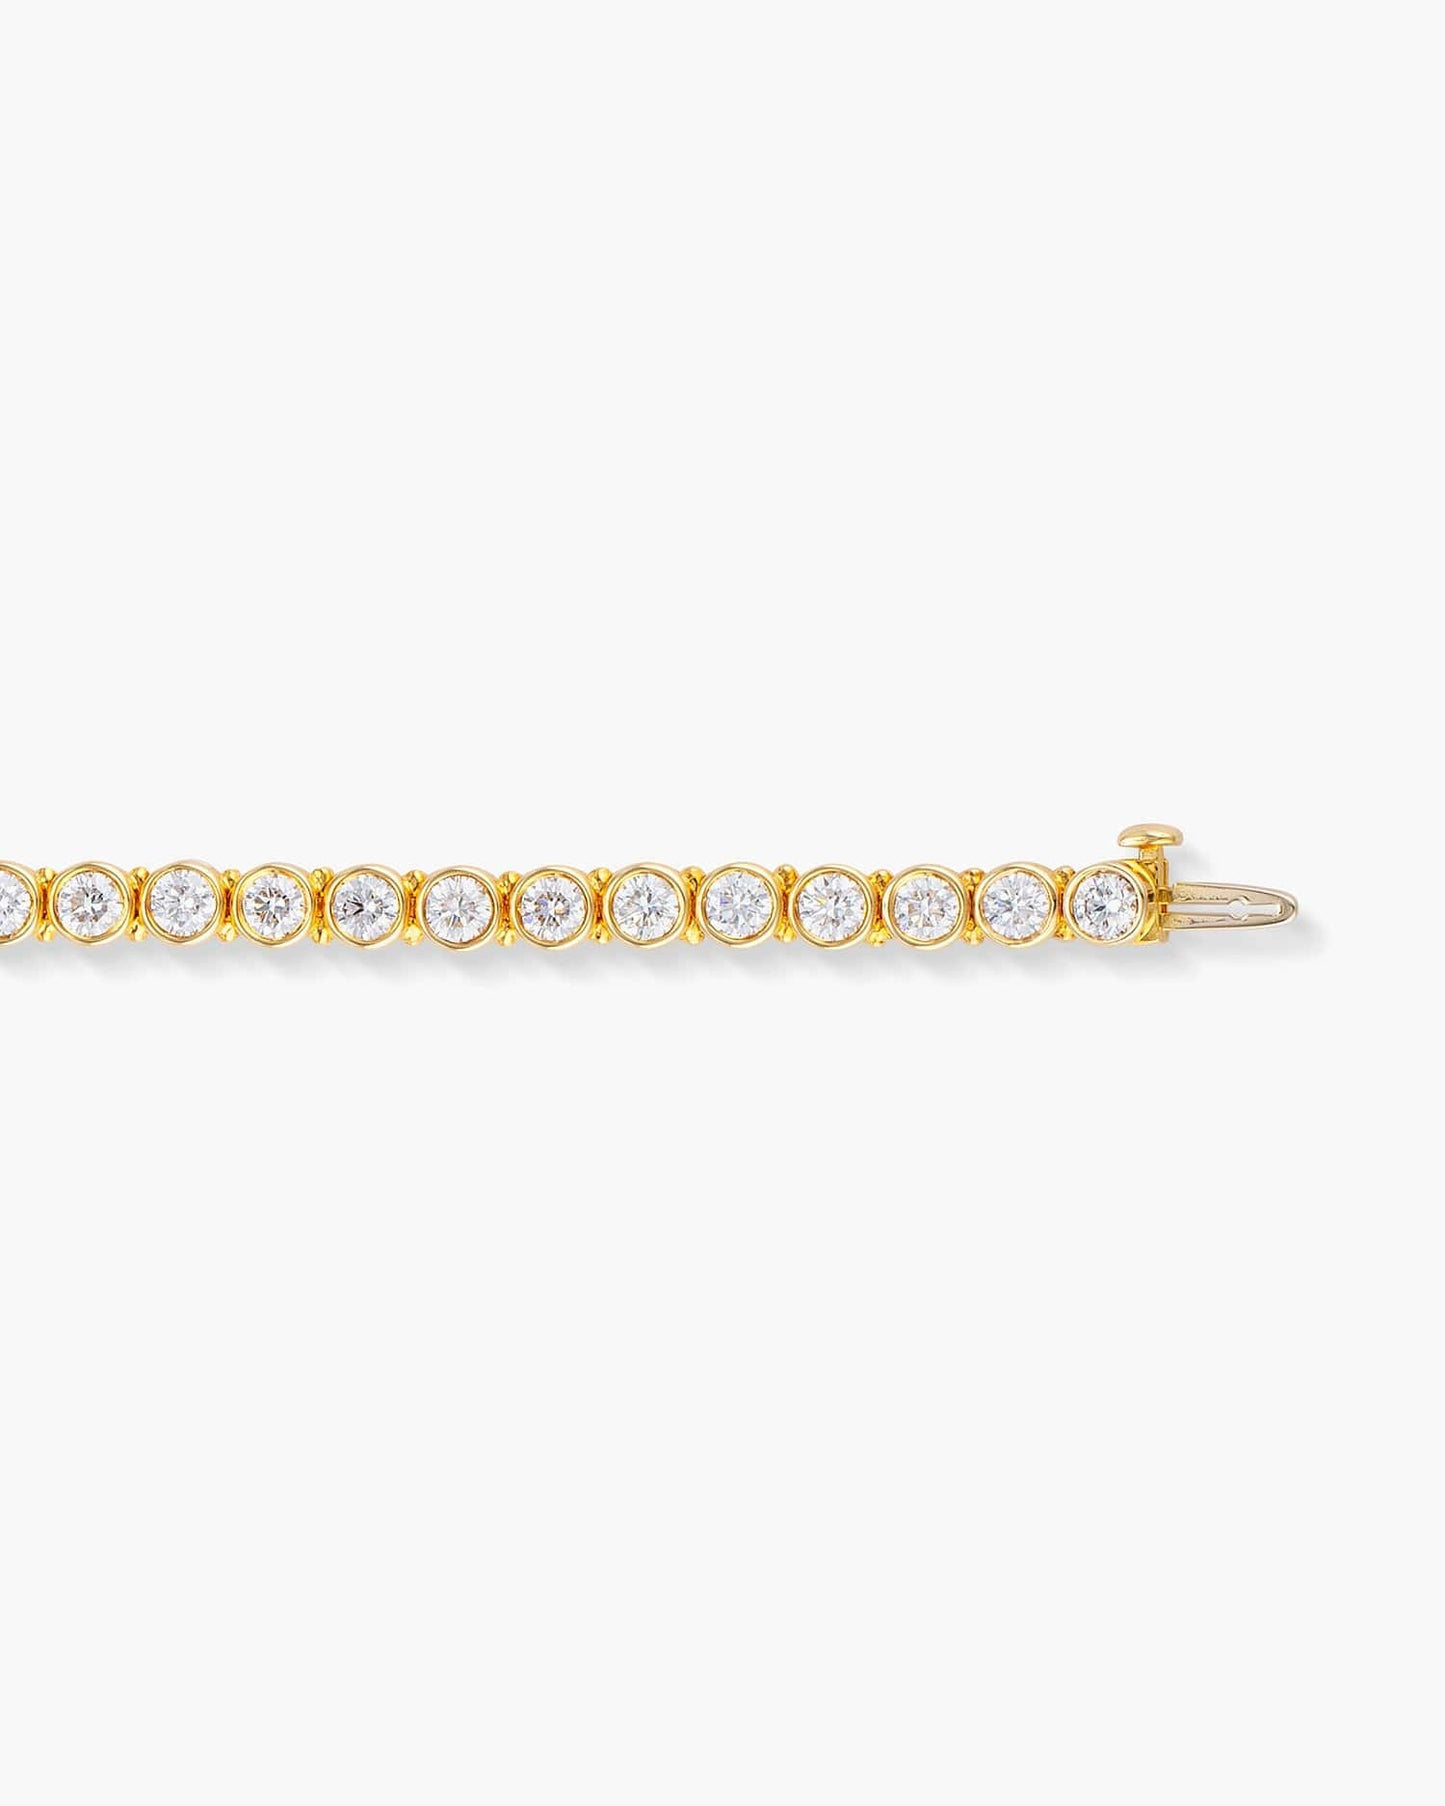 Round Brilliant Cut Diamond Yellow Gold Bracelet (0.08 carat)